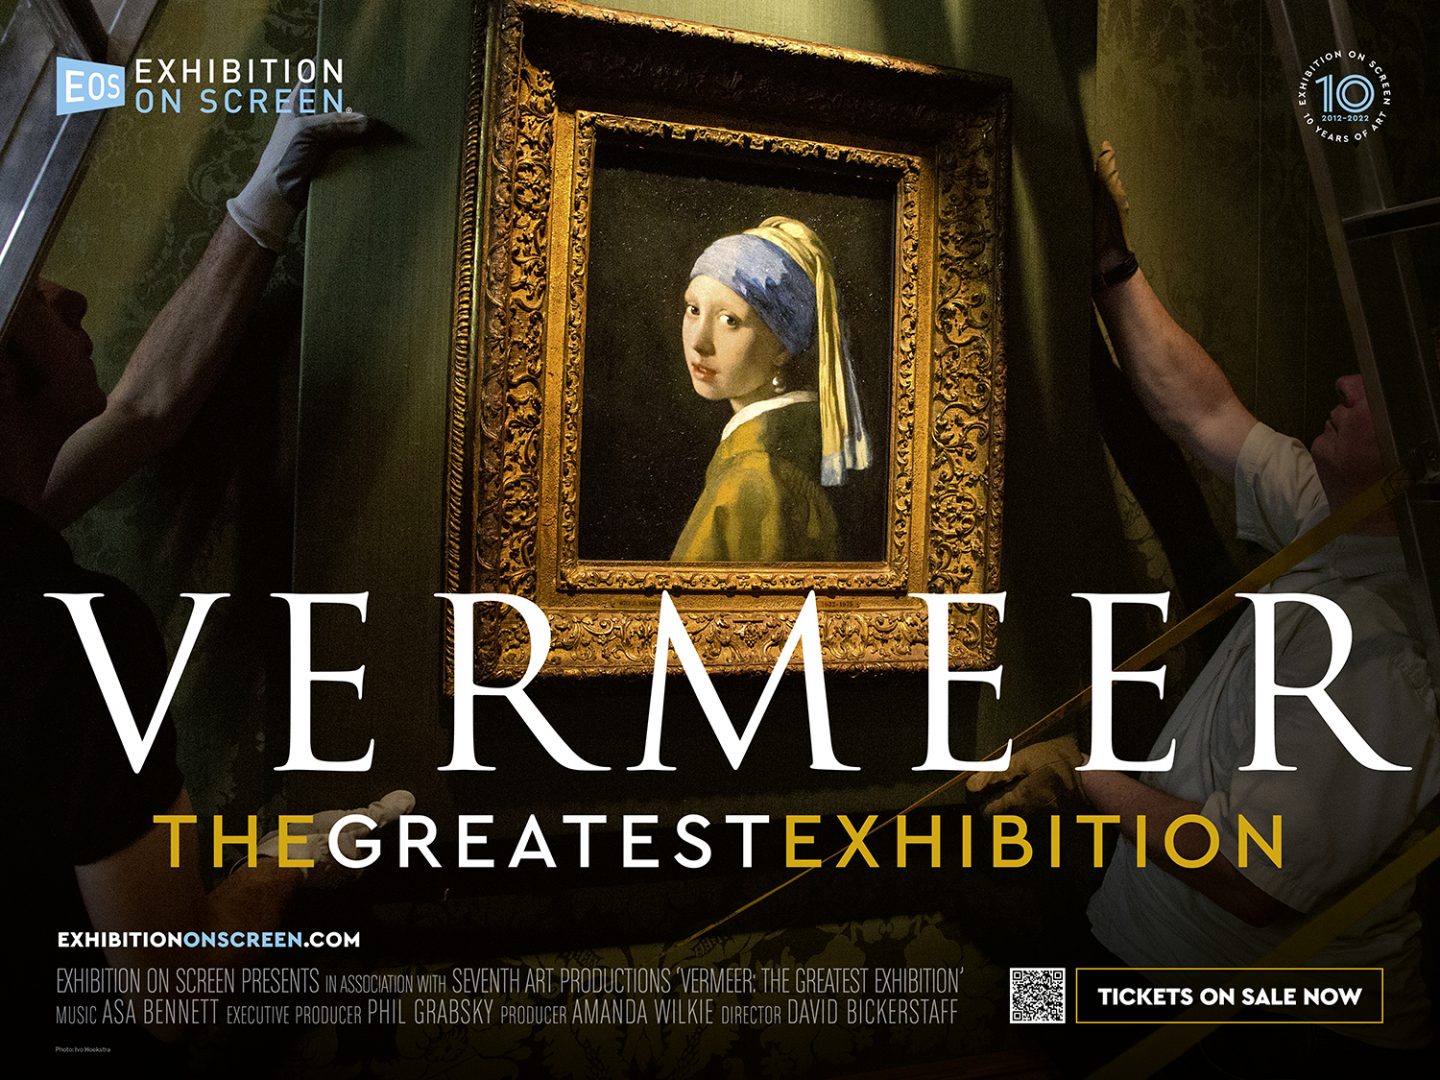 Exhibitions on Screen VERMEER THE GREATEST EXHIBITION Marine Theatre